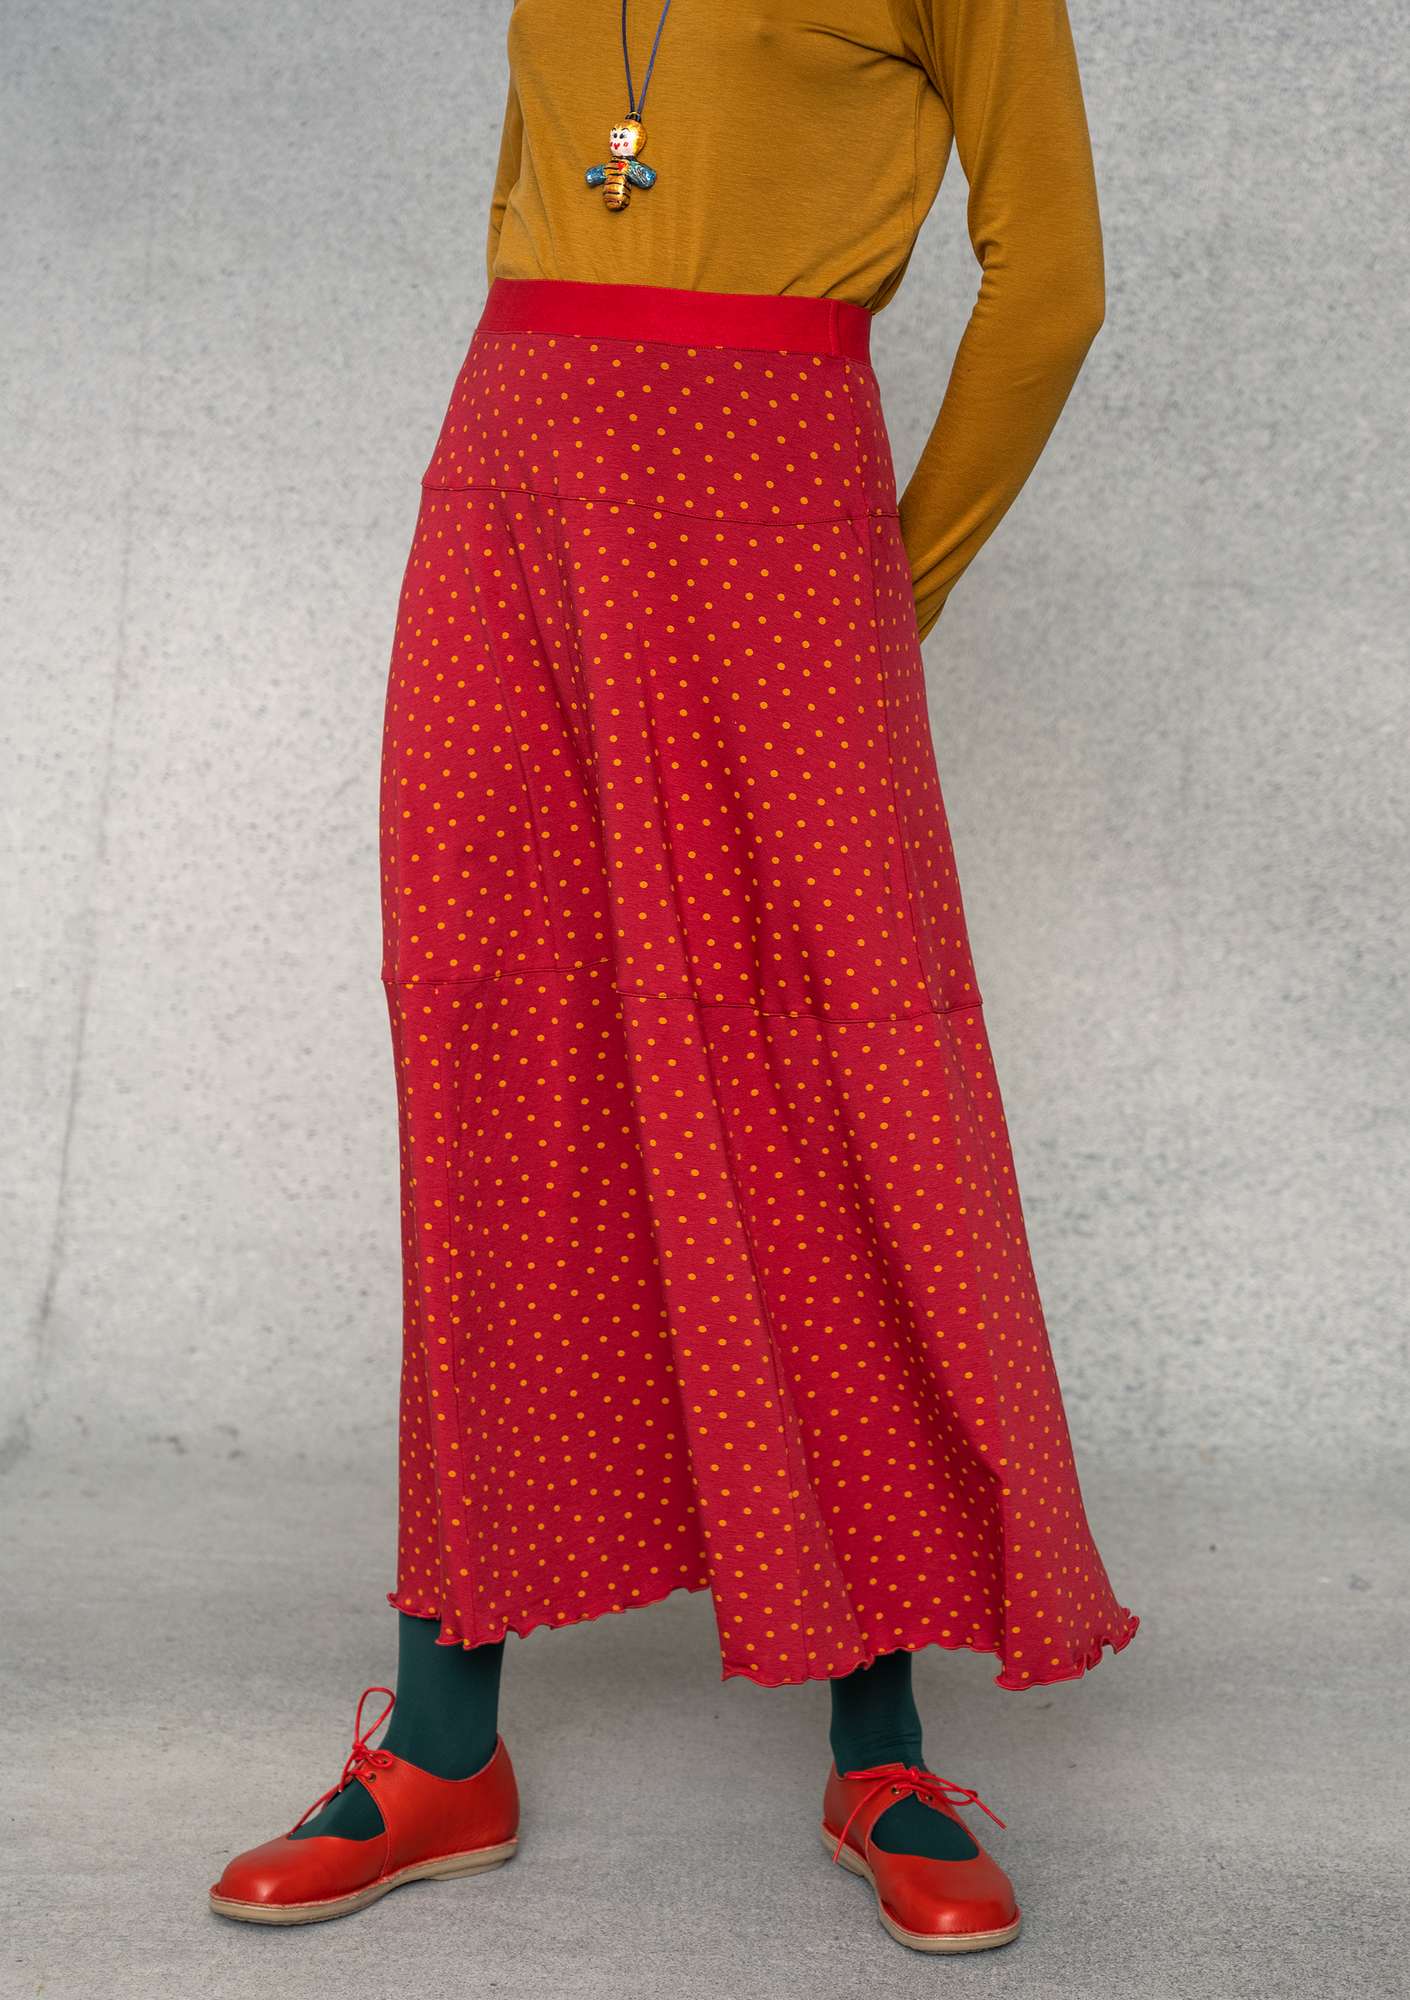 Pytte skirt cranberry/patterned